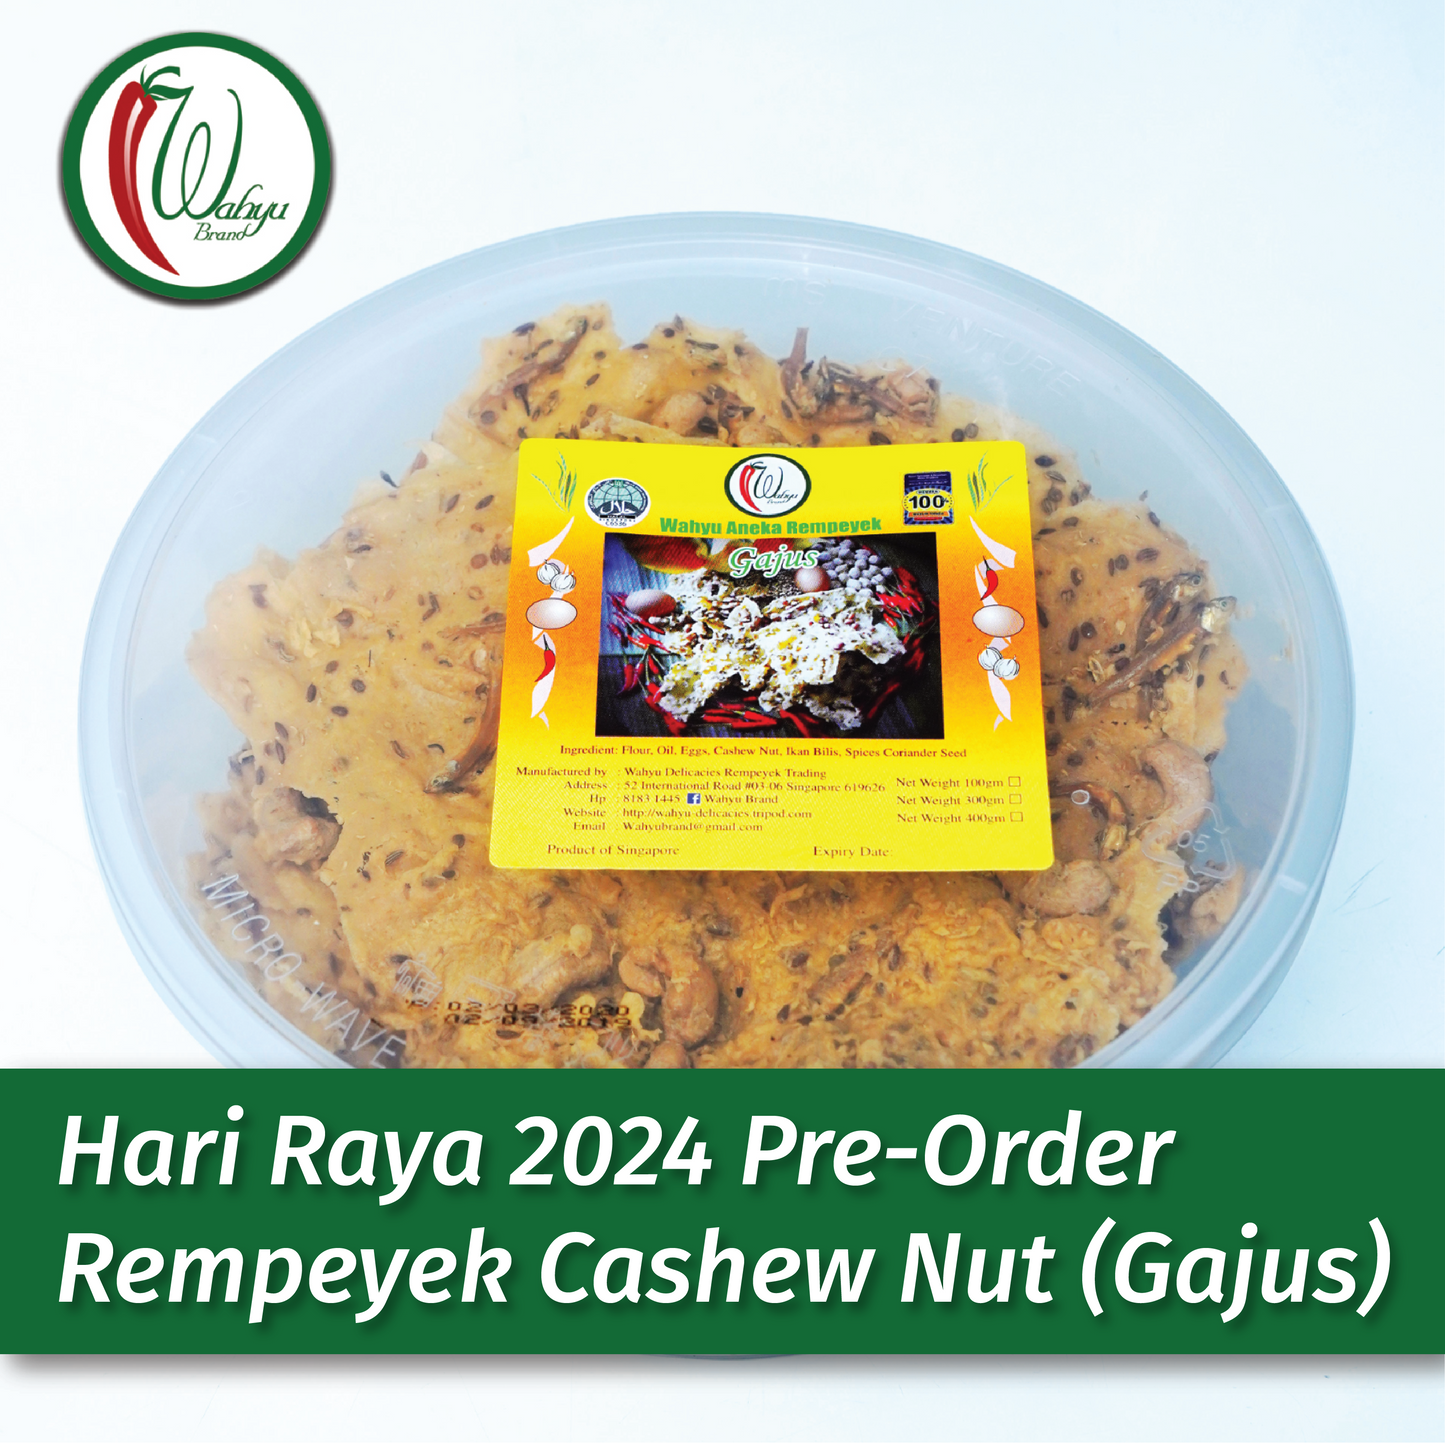 [Hari Raya Pre-Order] Rempeyek Cashew Nut (Gajus), 400g